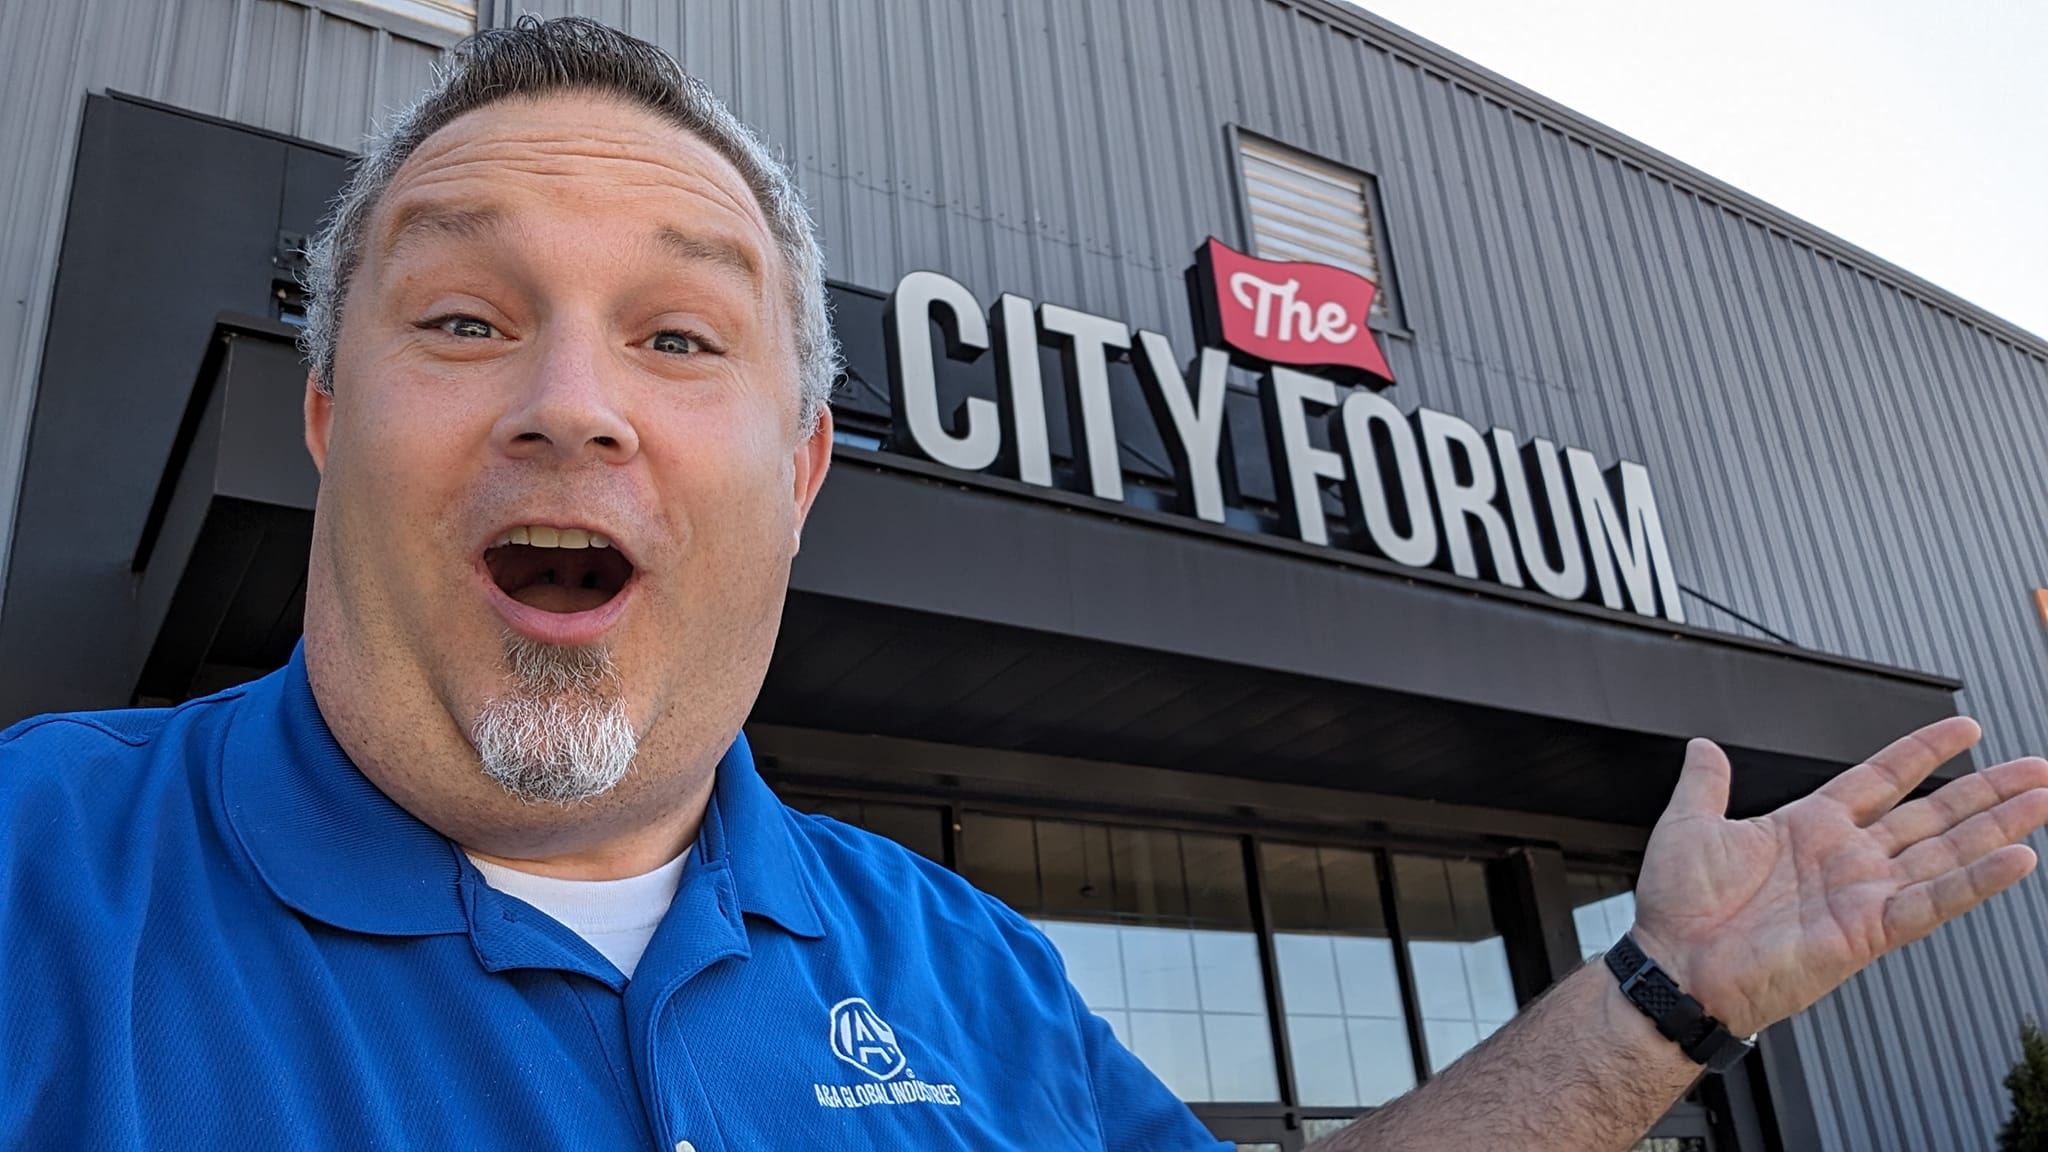 Clint Novak Visits The City Forum in Clarksville, TN